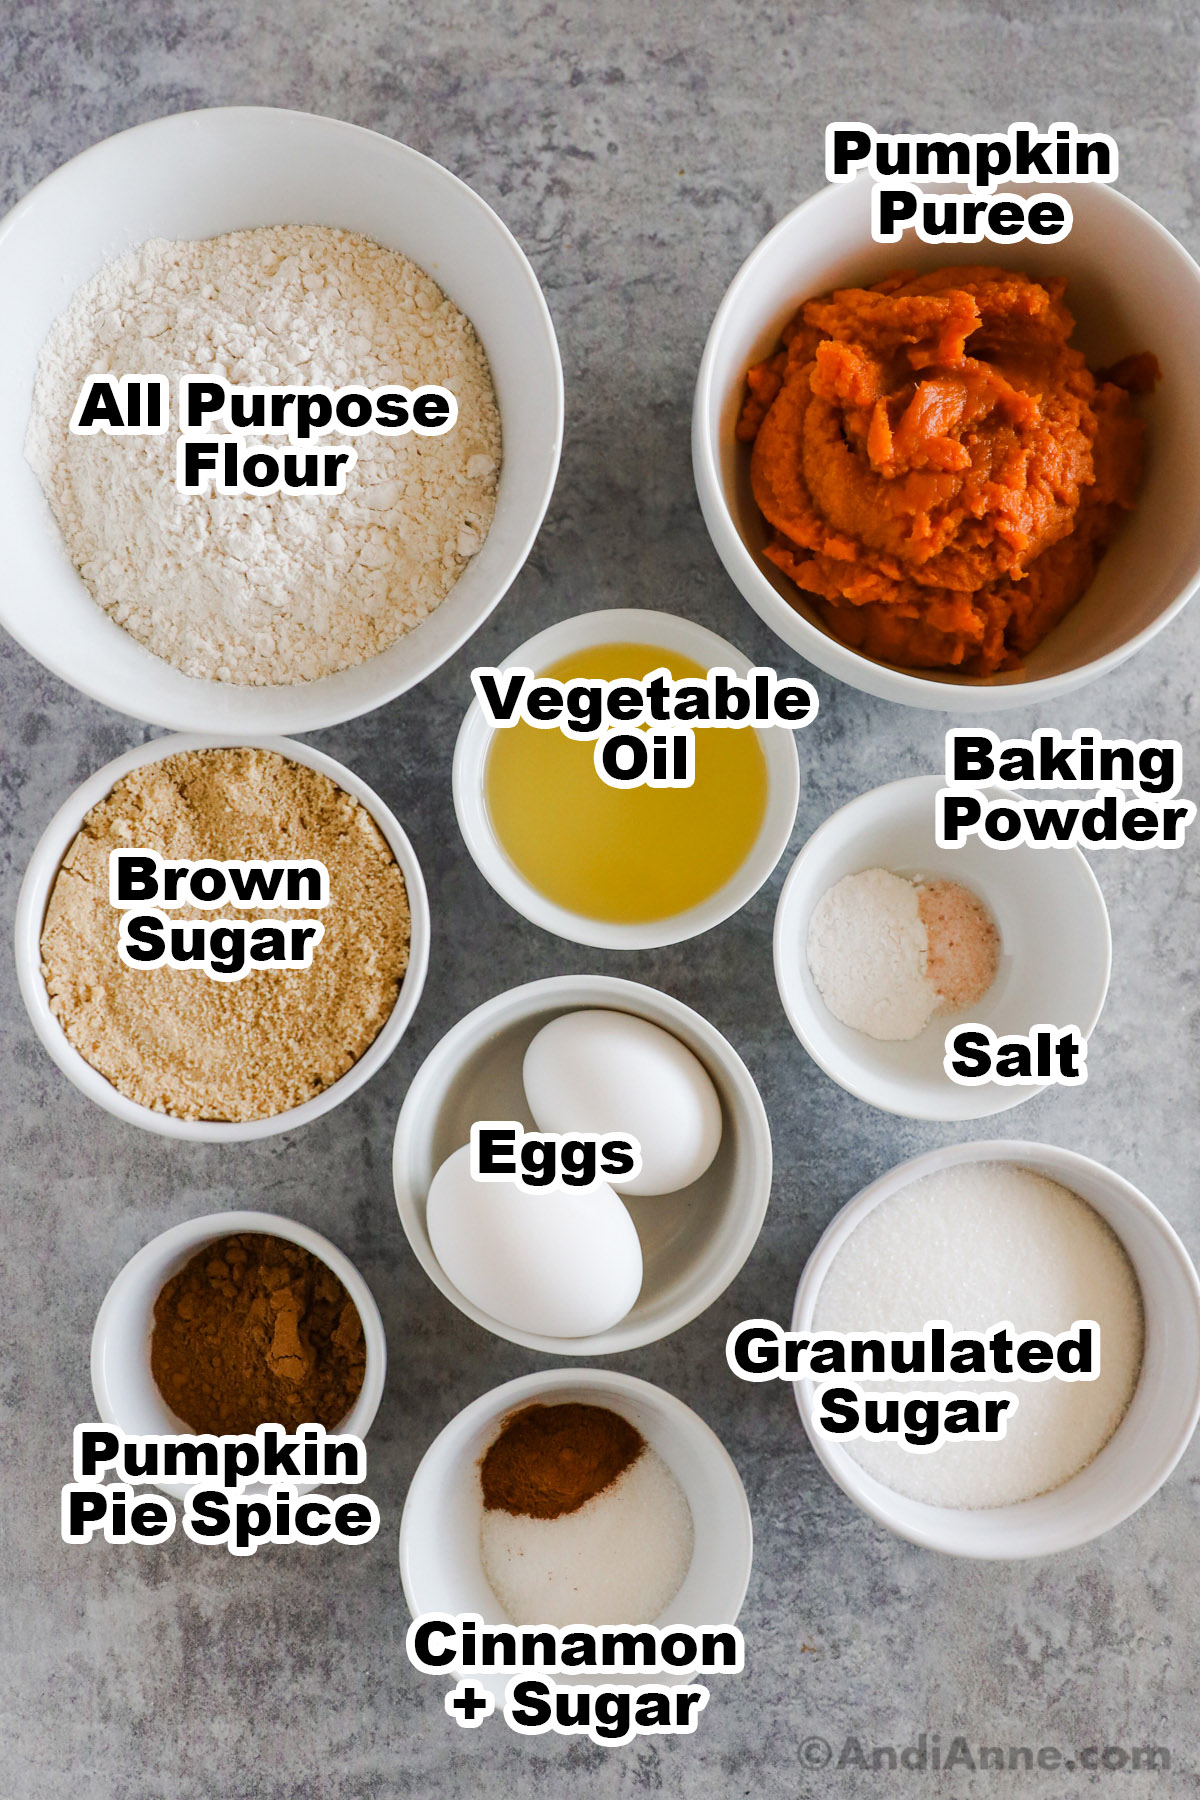 Recipe ingredients, all in bowls including flour, pumpkin puree, brown sugar, vegetable oil, baking powder, salt, eggs, granulated sugar and pumpkin pie spice.